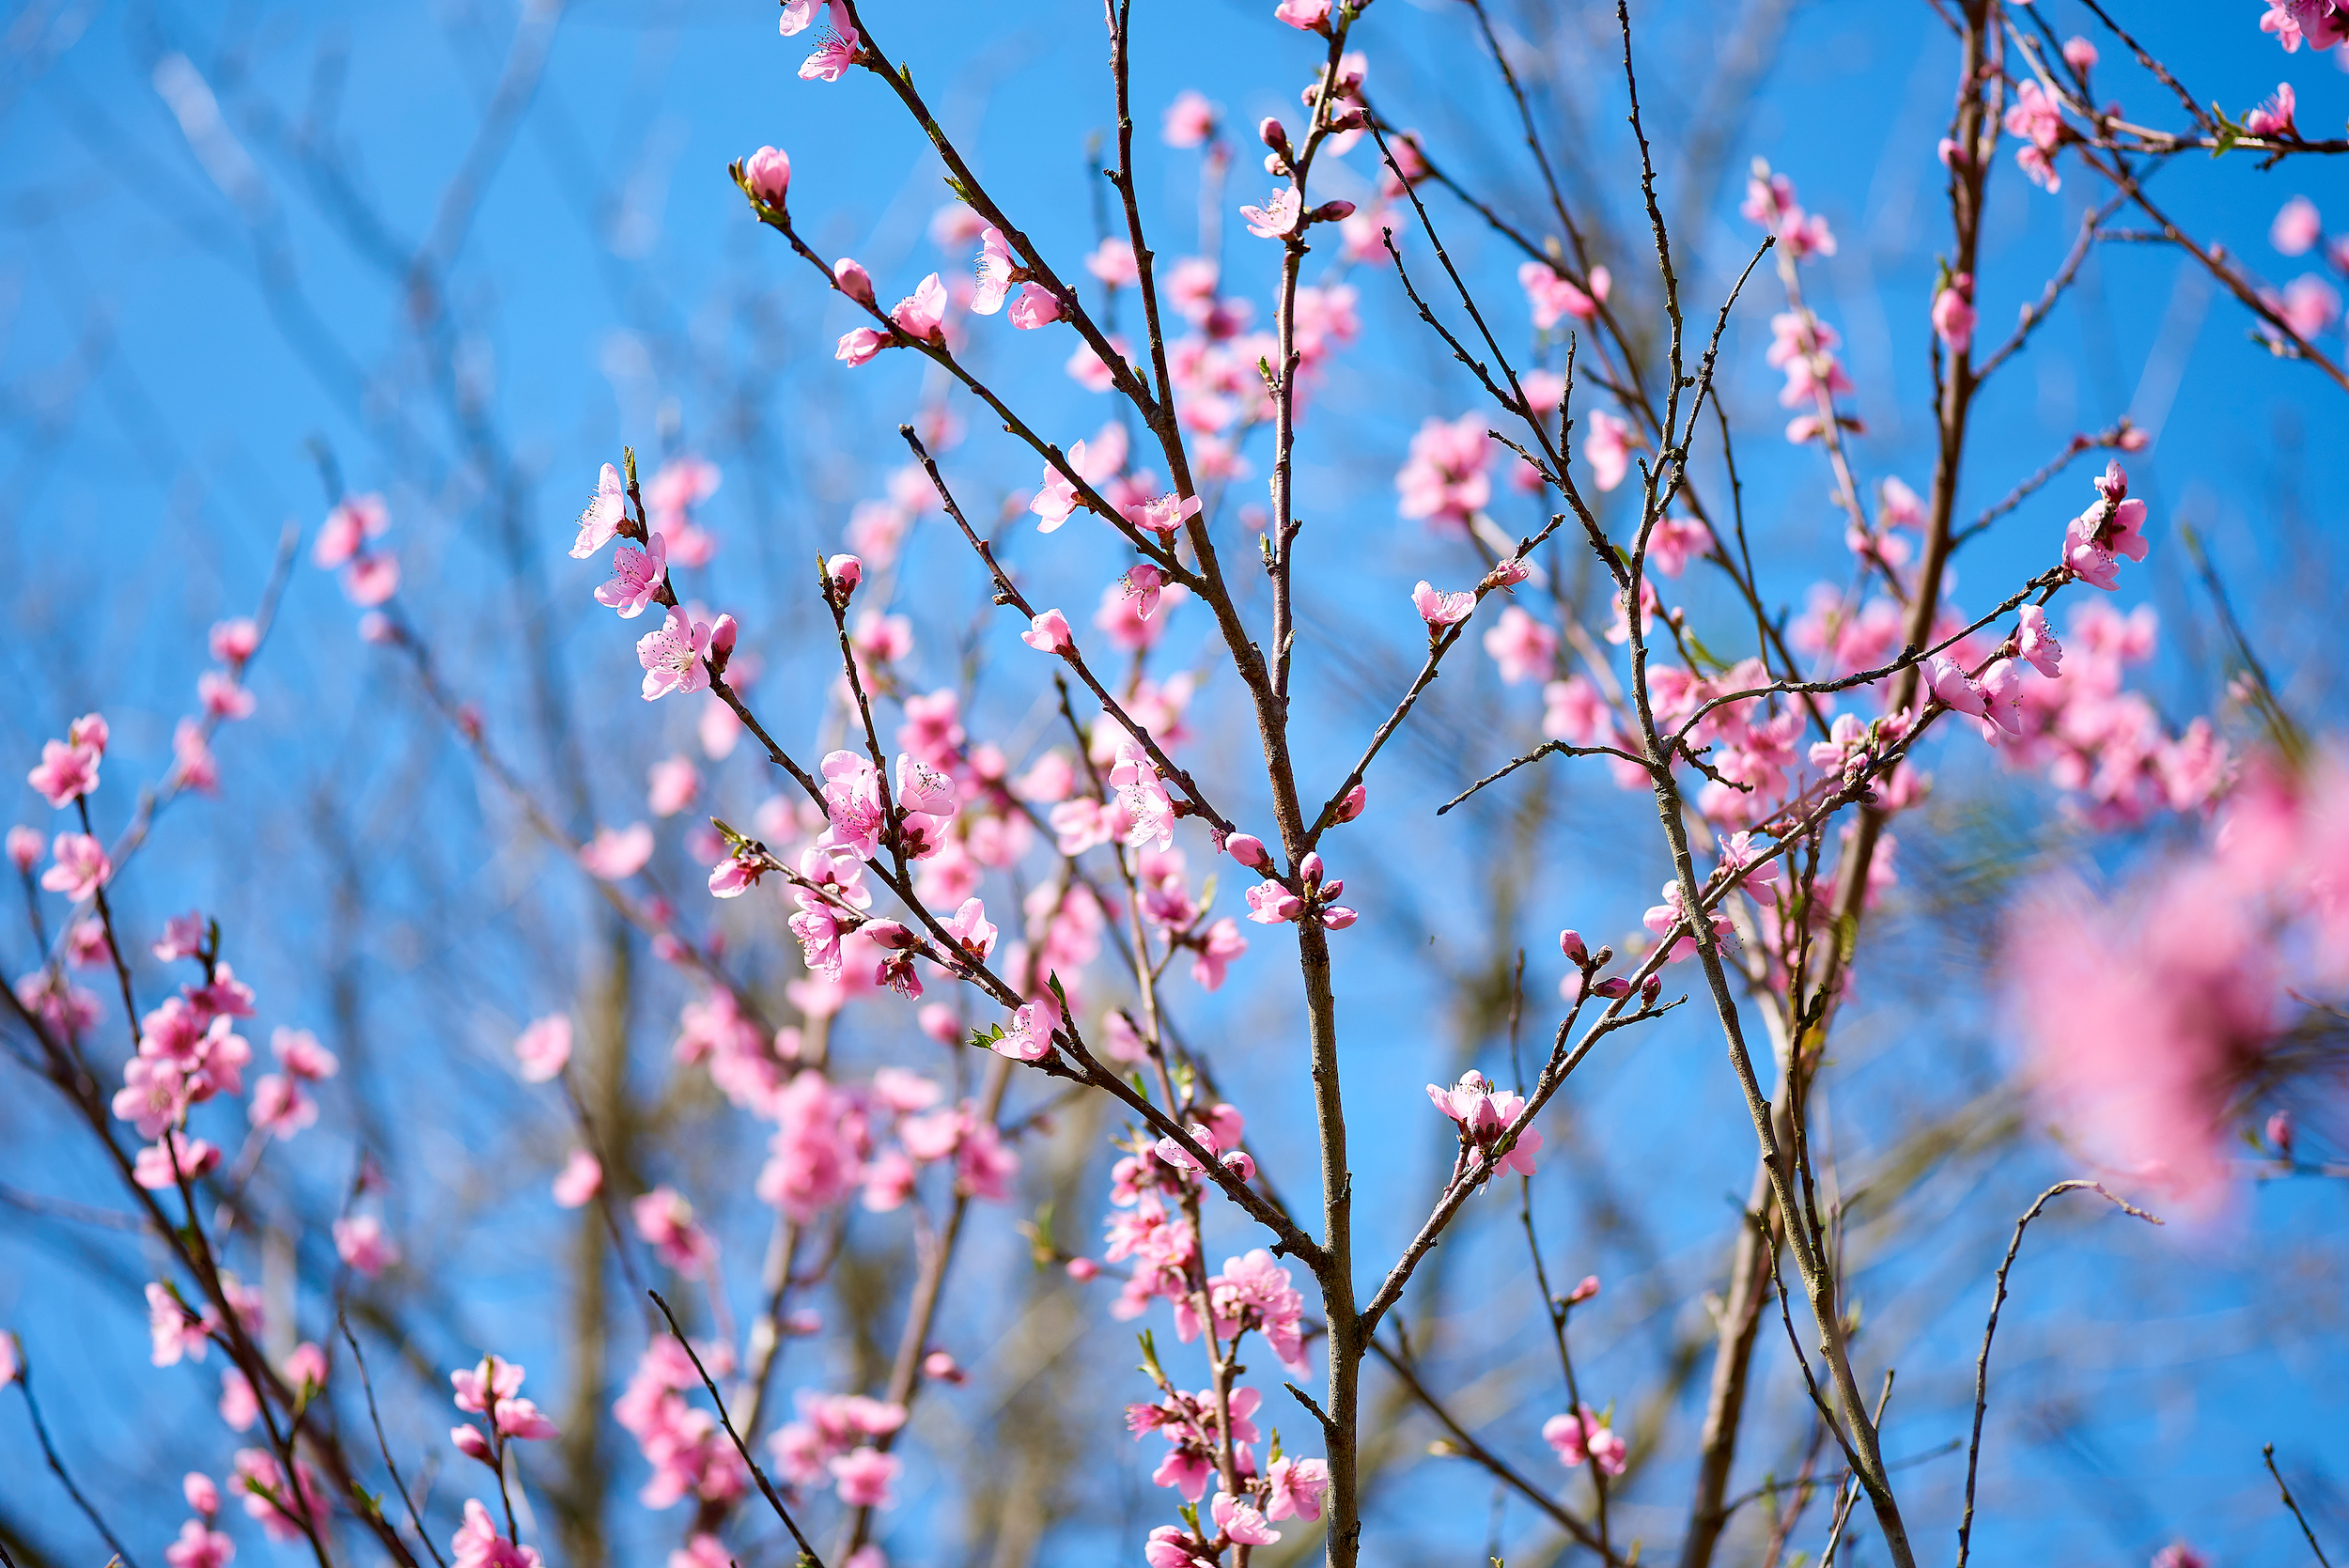 apochrom - fleurs de cerisiers